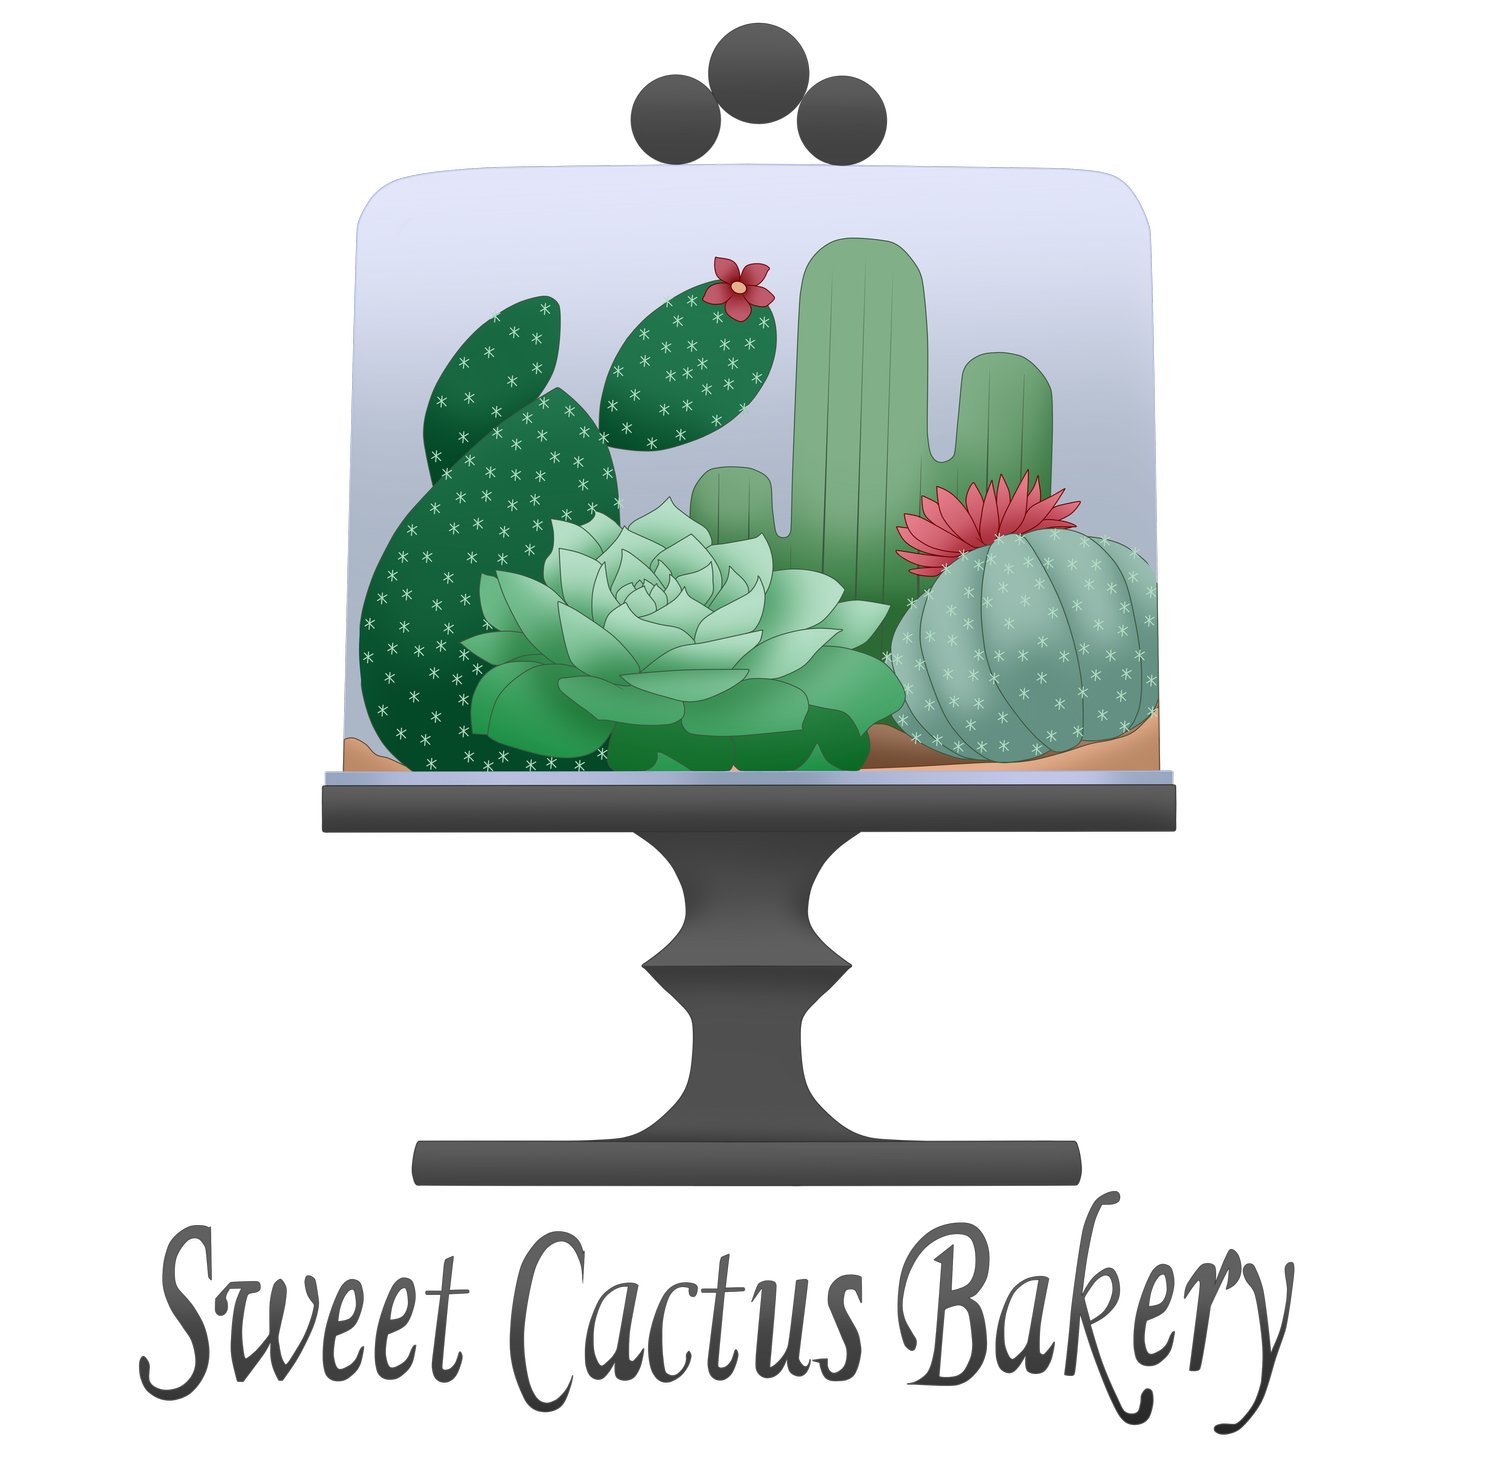 Sweet Cactus Bakery, LLC